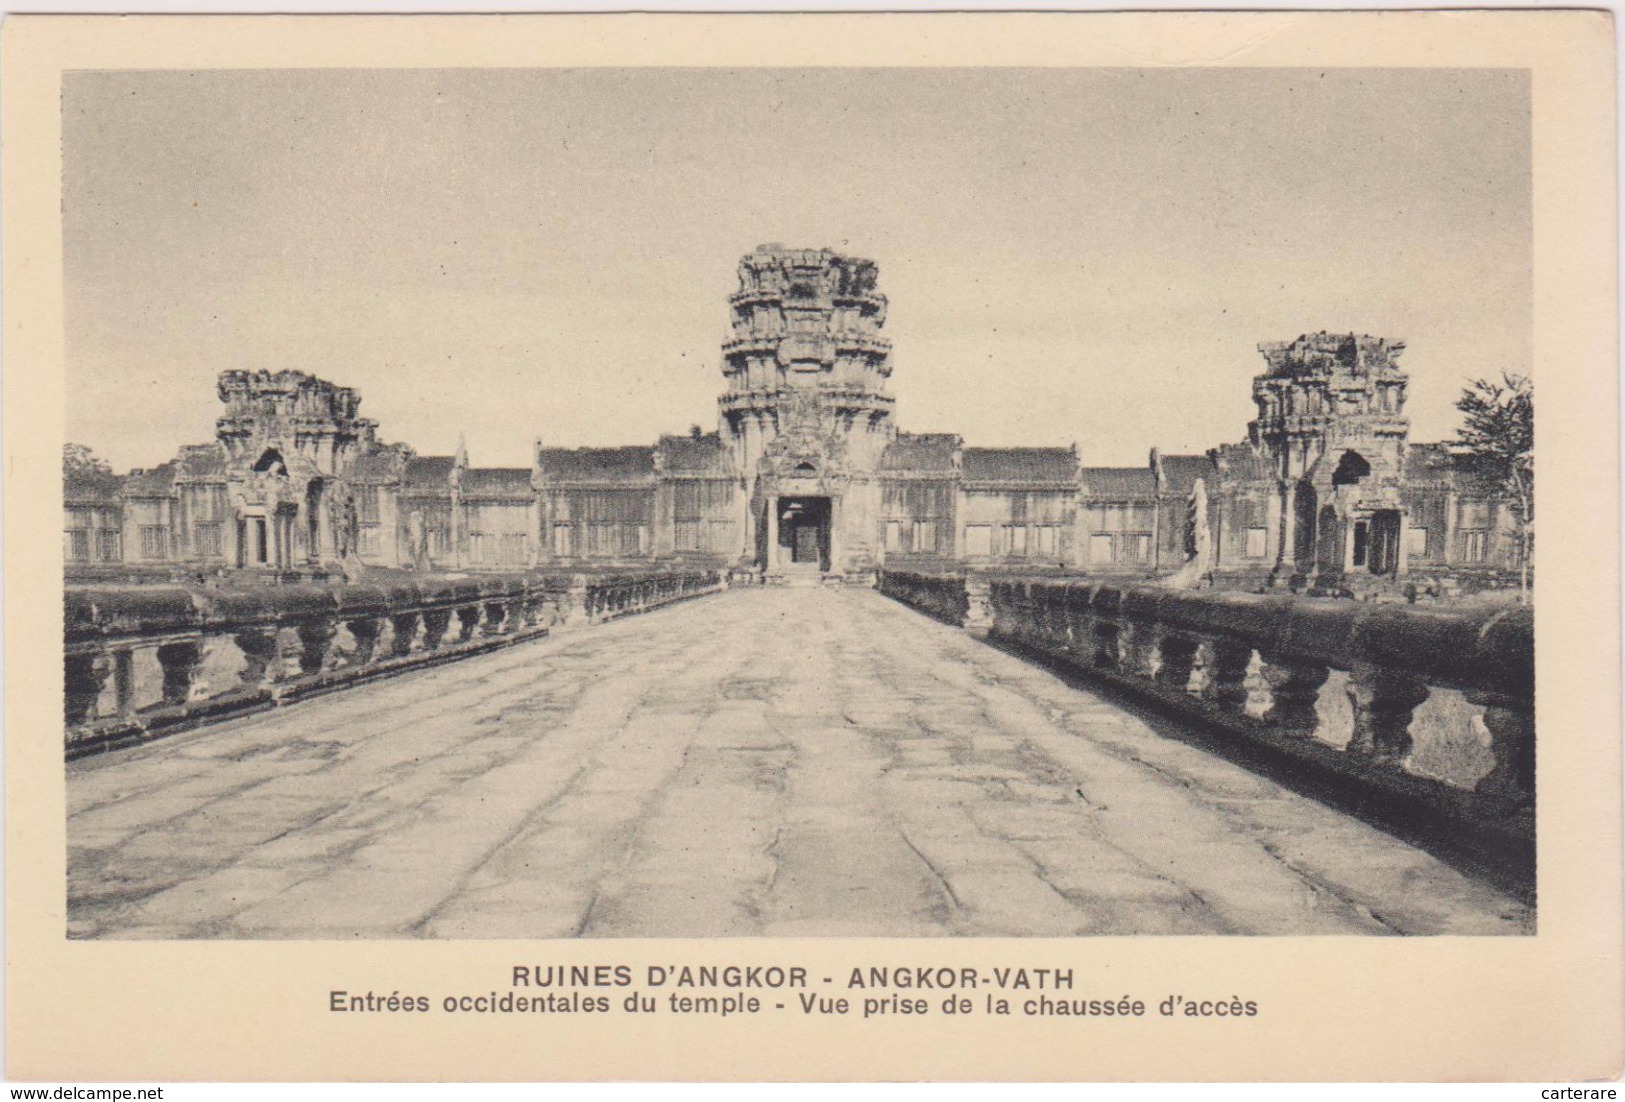 ASIE,ASIA,INDOCHINE FRANCAISE,CAMBODGE,ANGKOR-VAT,cité Impériale Religieuse Khmère,TEMPLE,photo Nadal - Cambodge